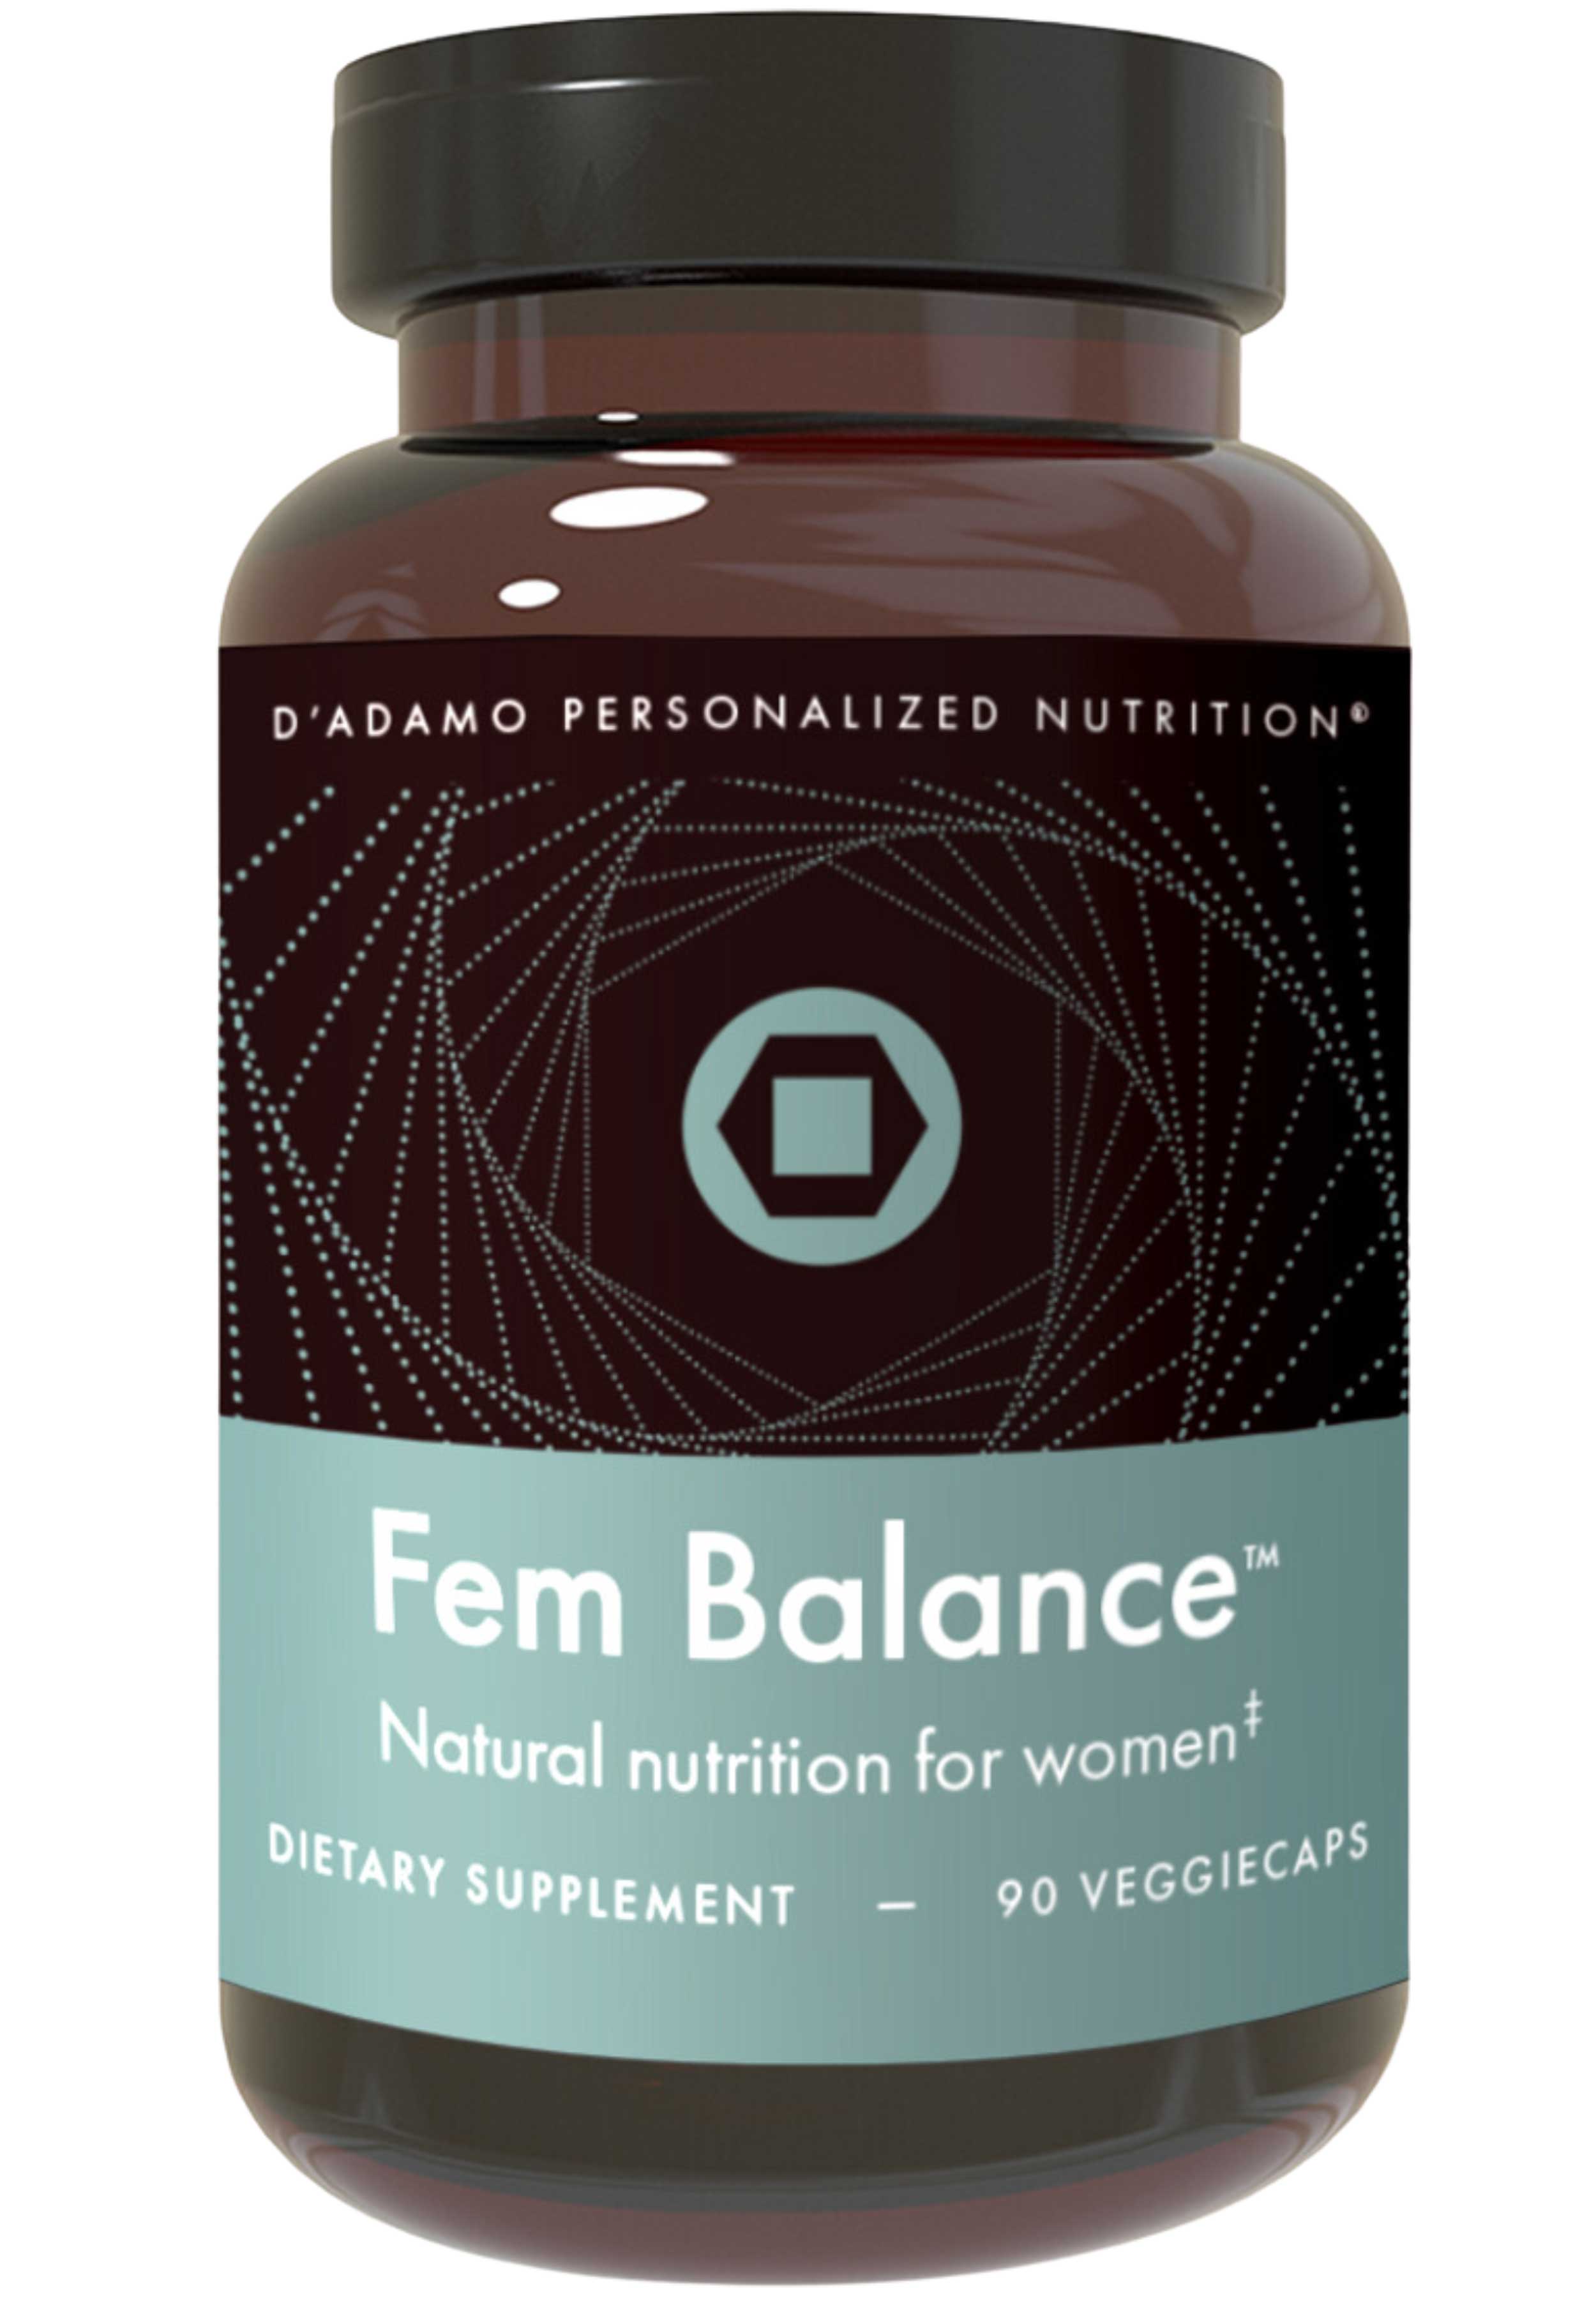 D'Adamo Personalized Nutrition Fem Balance